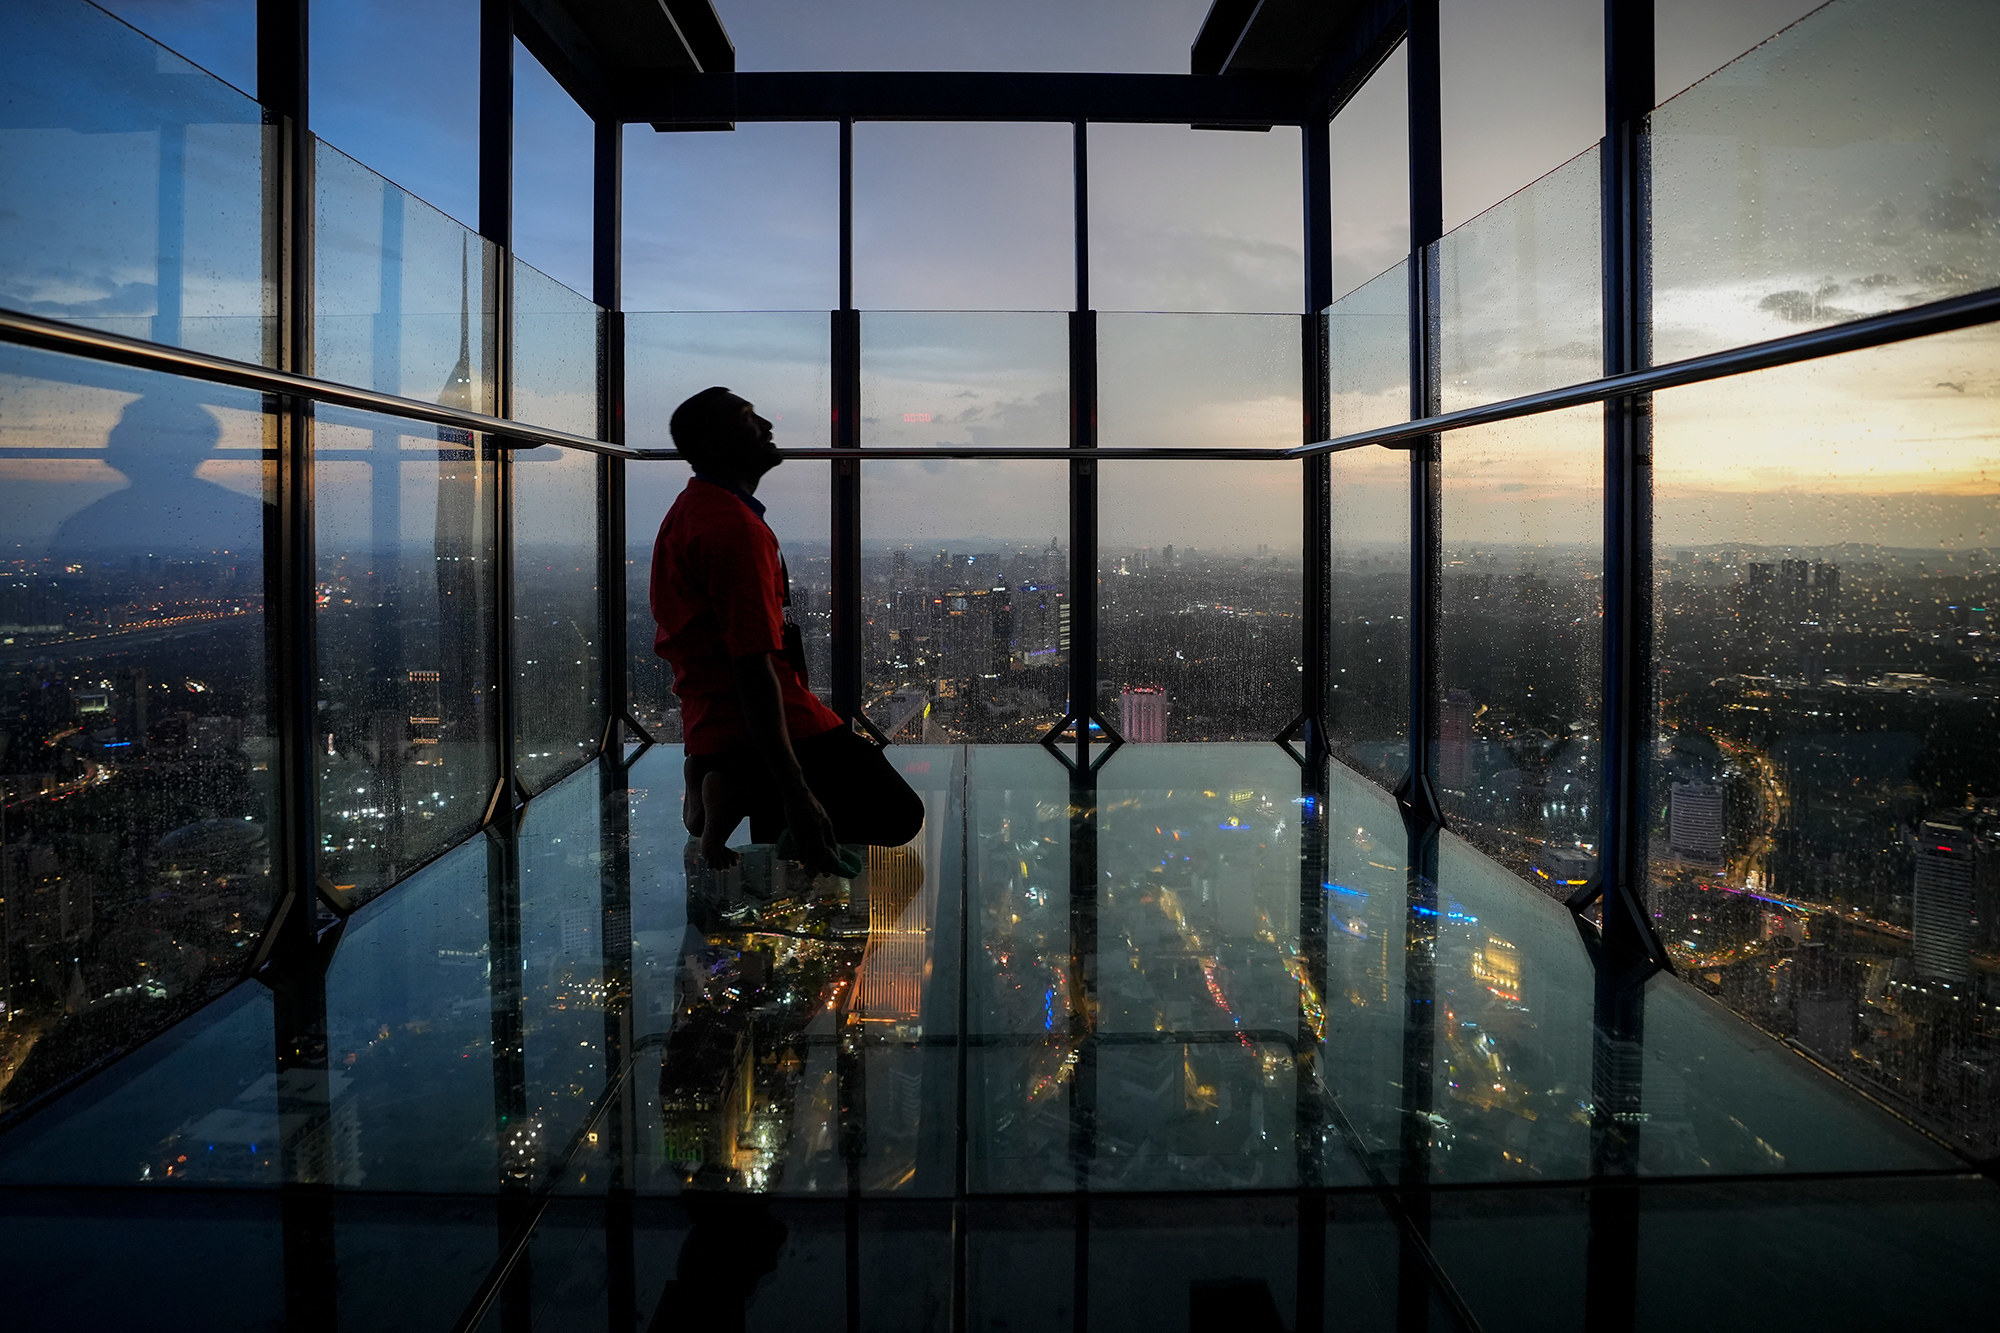 a man kneels in a glass skyscraper at dusk